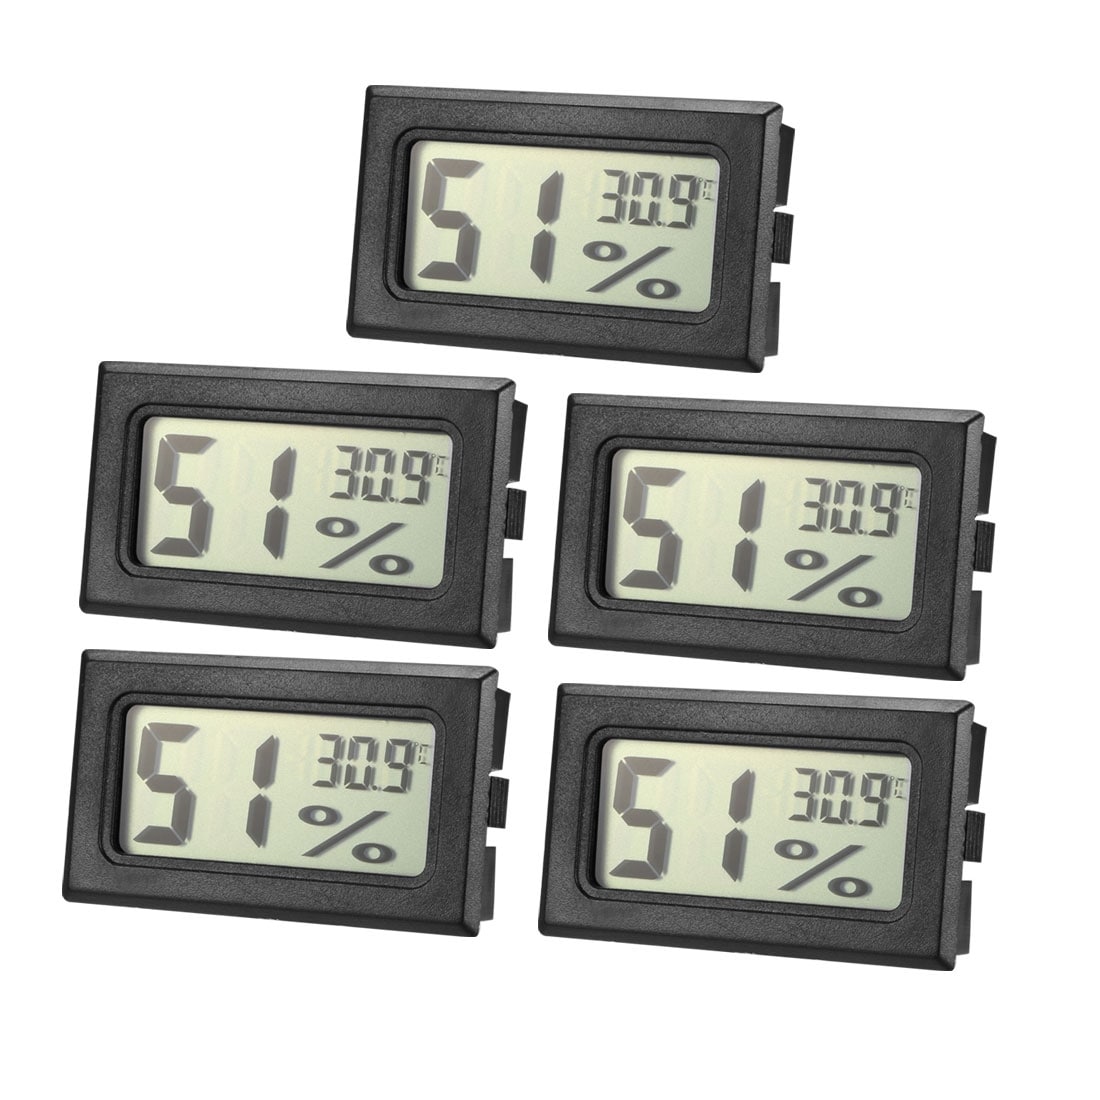 https://ak1.ostkcdn.com/images/products/is/images/direct/51f9cbb410de76c827b0930e0982a4ed3d977138/Black-Digital-Temperature-Humidity-Meters-Gauge-Thermometer-Hygrometer-5pcs.jpg